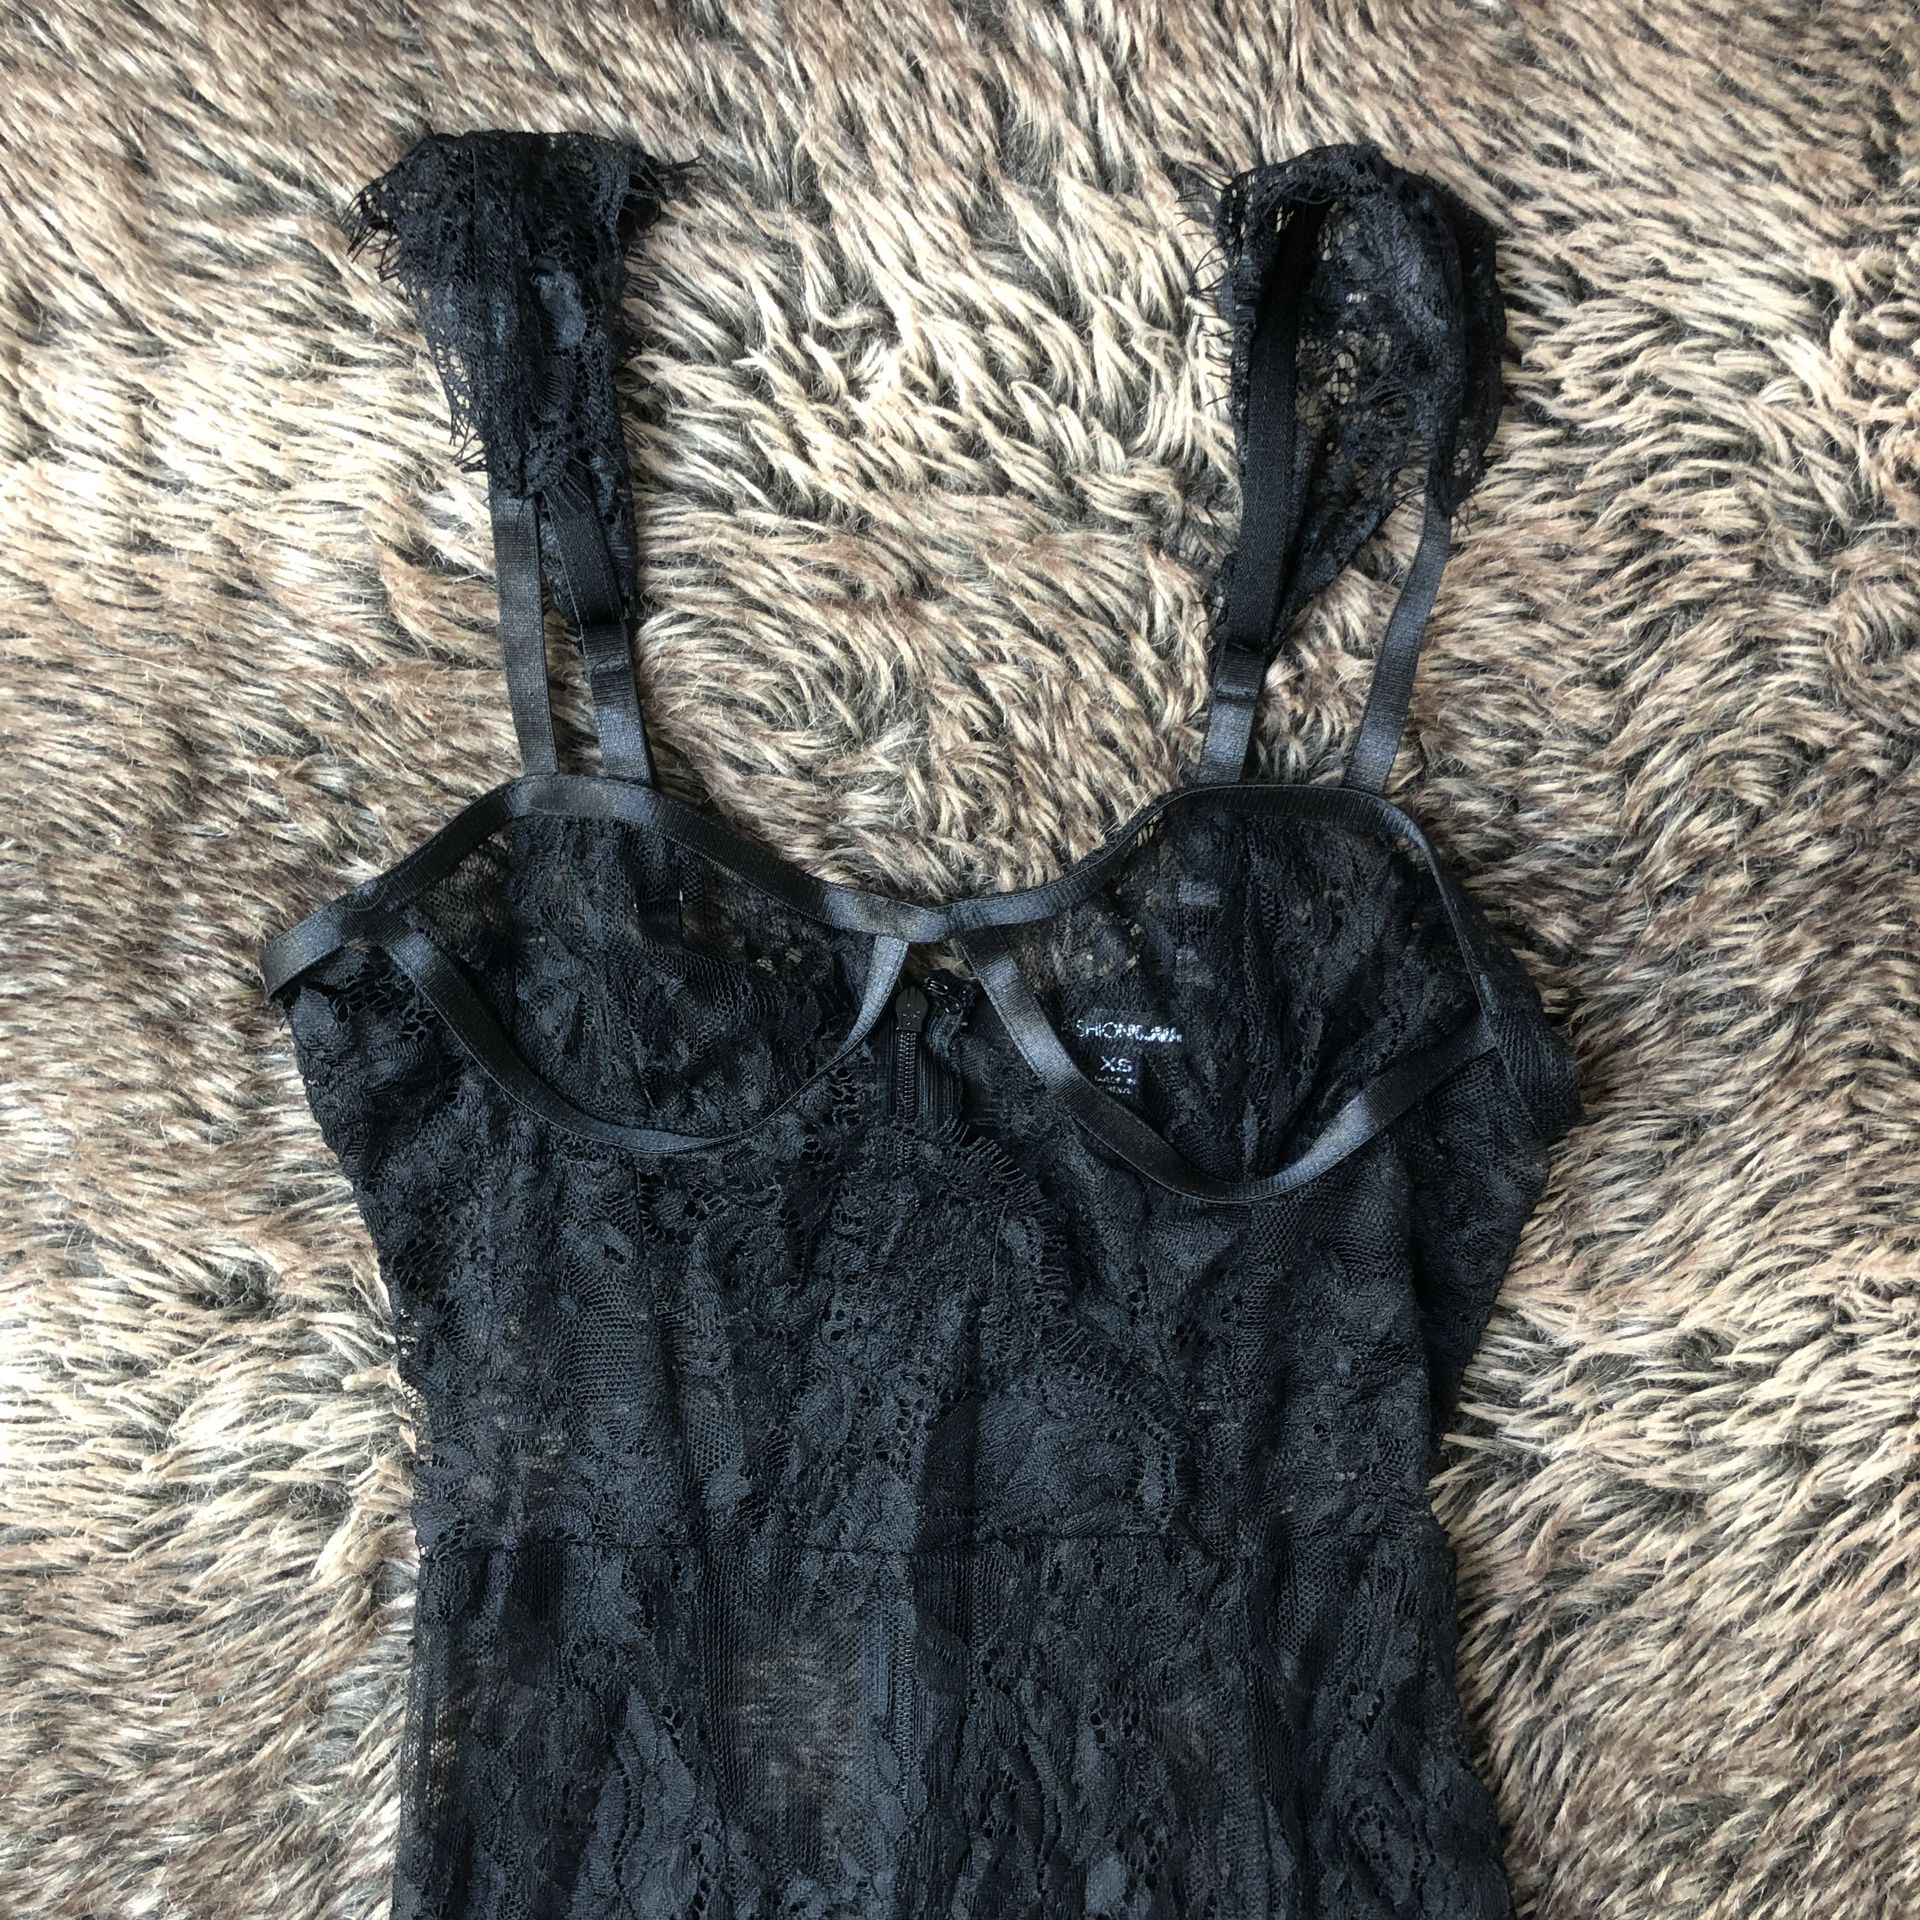 Fashion Nova Black Lace Dress for Sale in Medford, MA - OfferUp